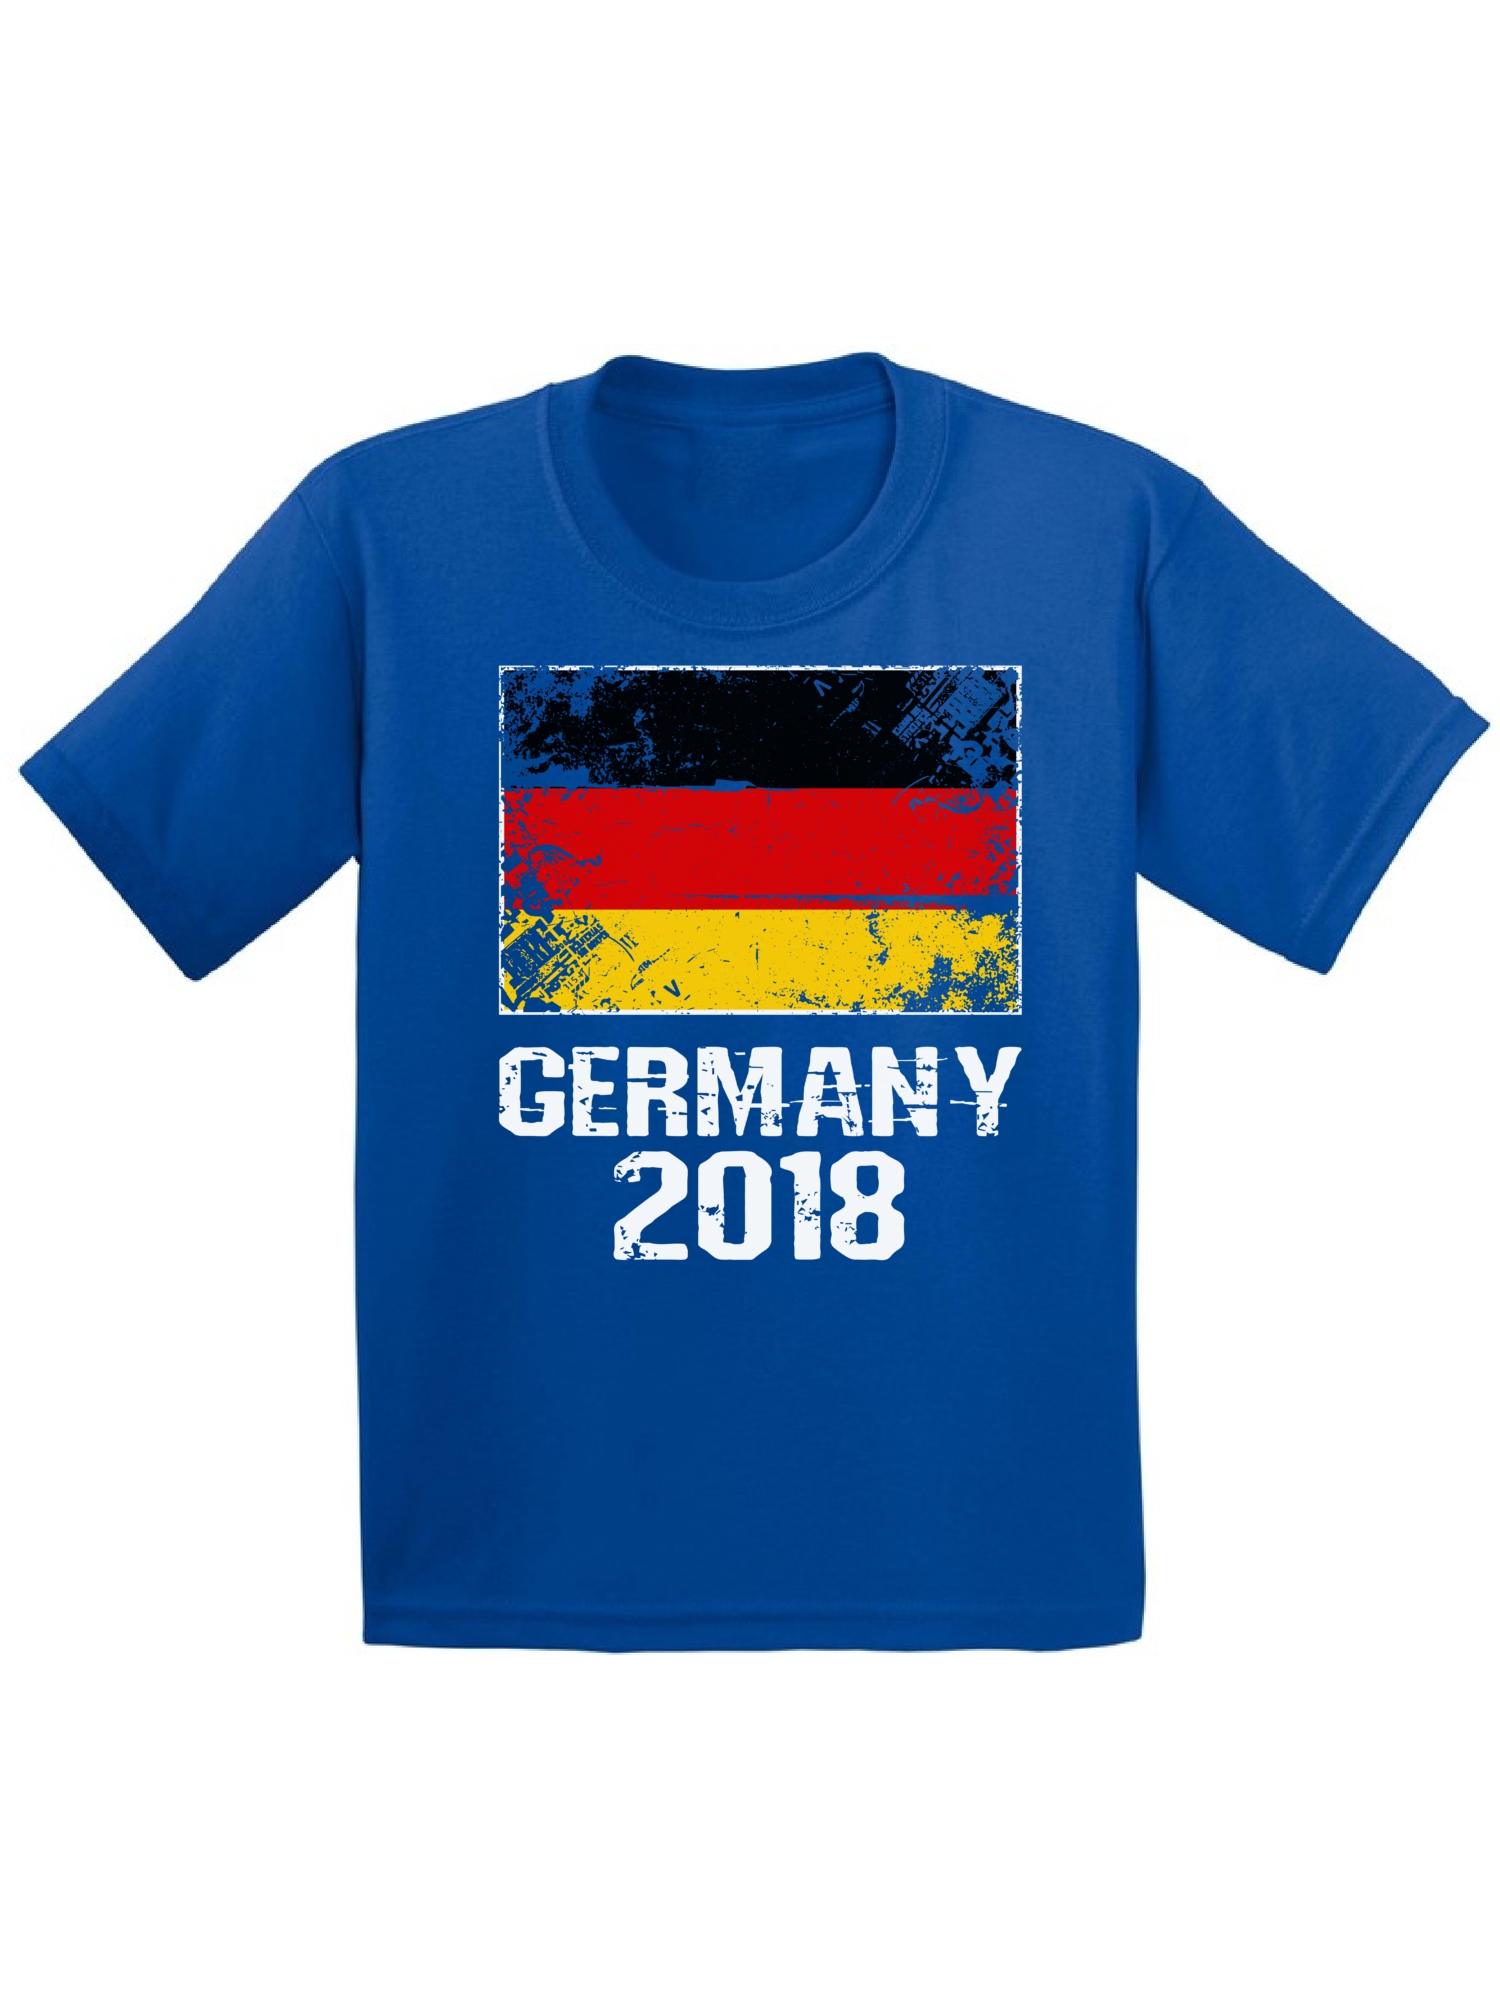 Awkward Styles Germany 2018 Kids Shirt German Flag Gifts Football Youth Shirt - image 1 of 4